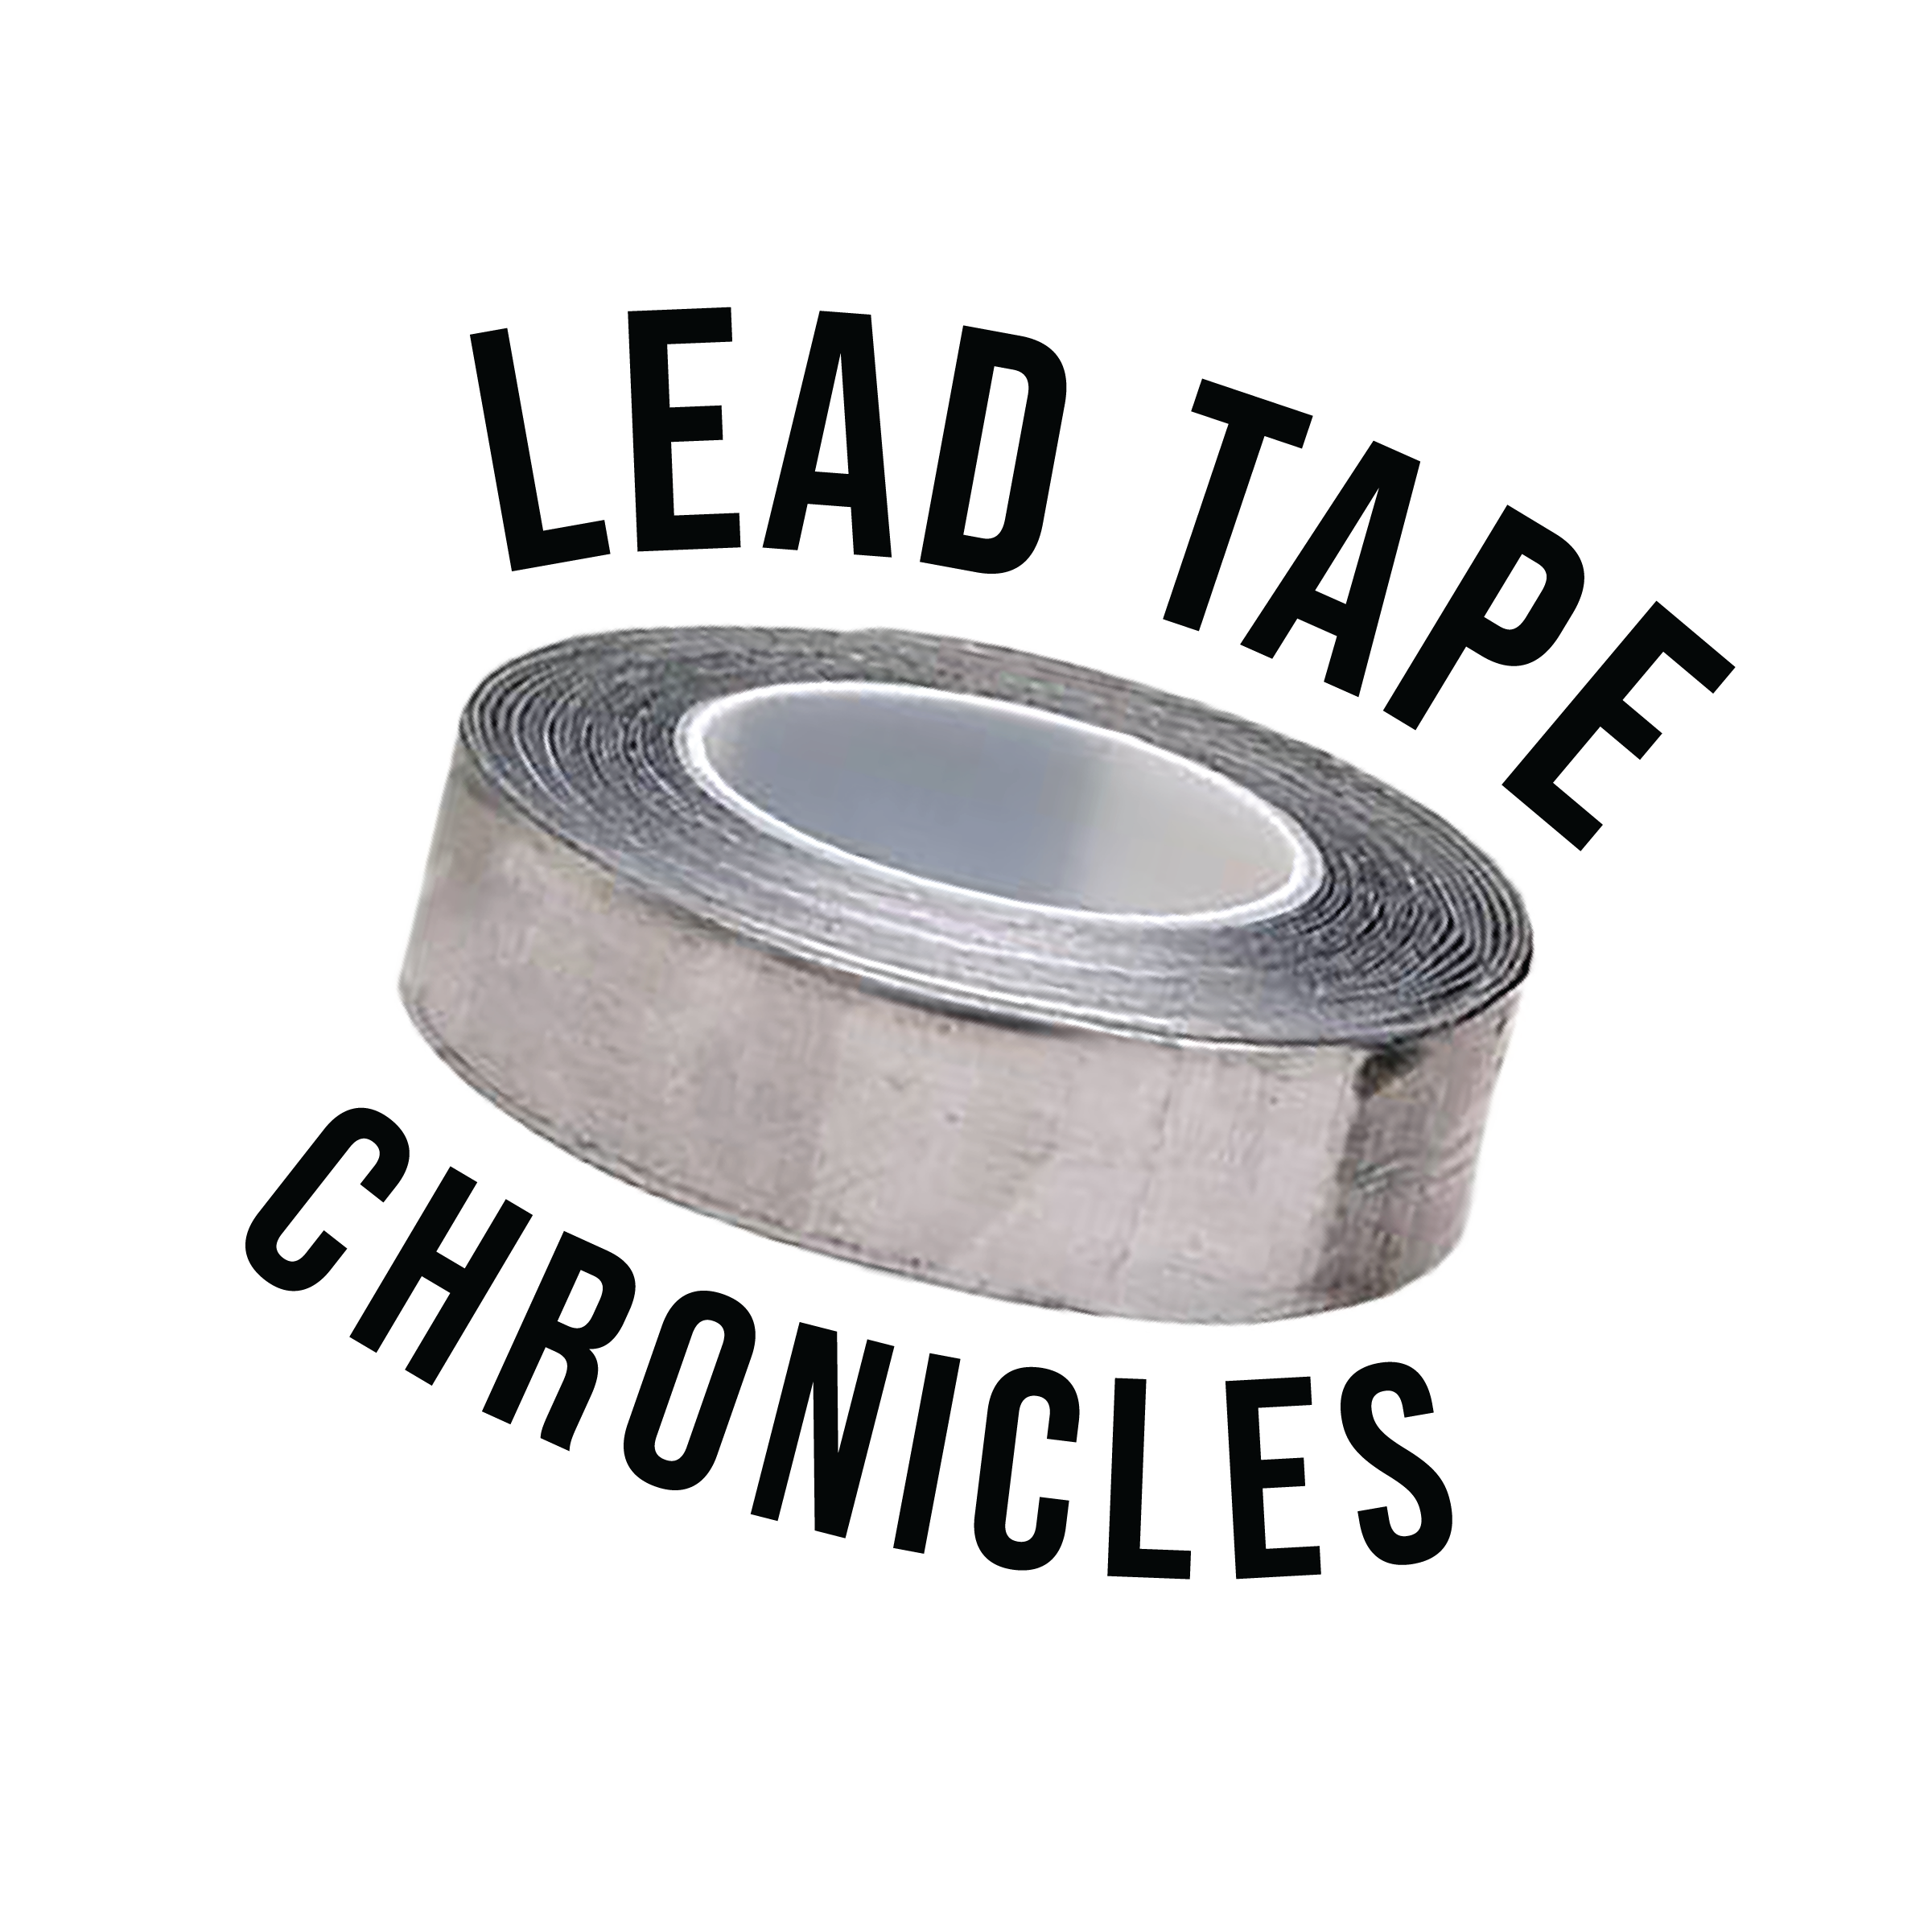 High Density Lead Foil Tape - The GolfWorks